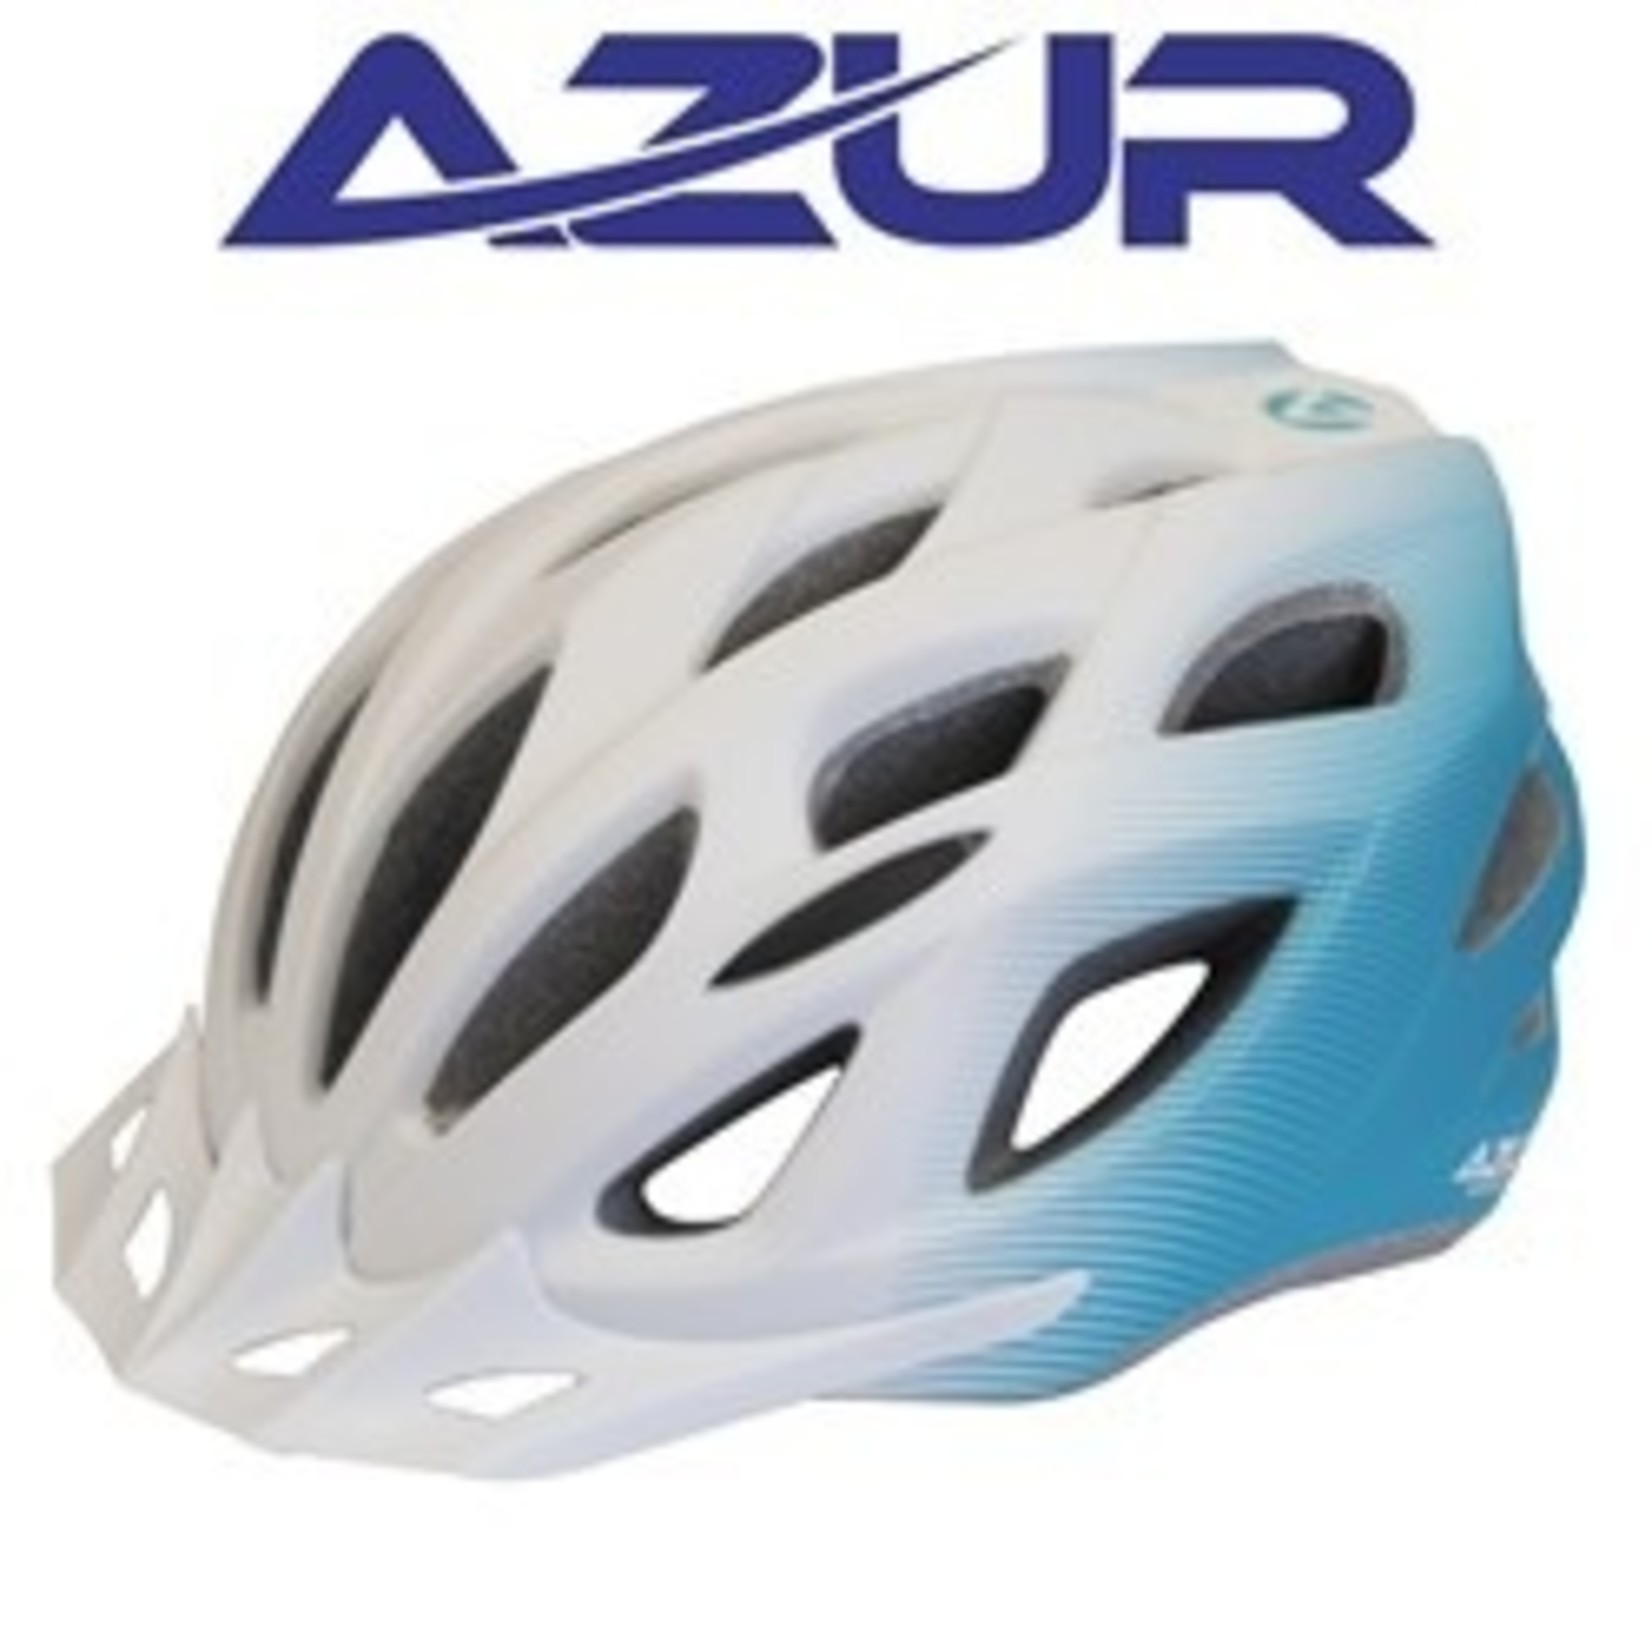 Azur Azur Bike Helmet-L61 Series Dial Comfort Fit System - Satin White Bubblegum Fade